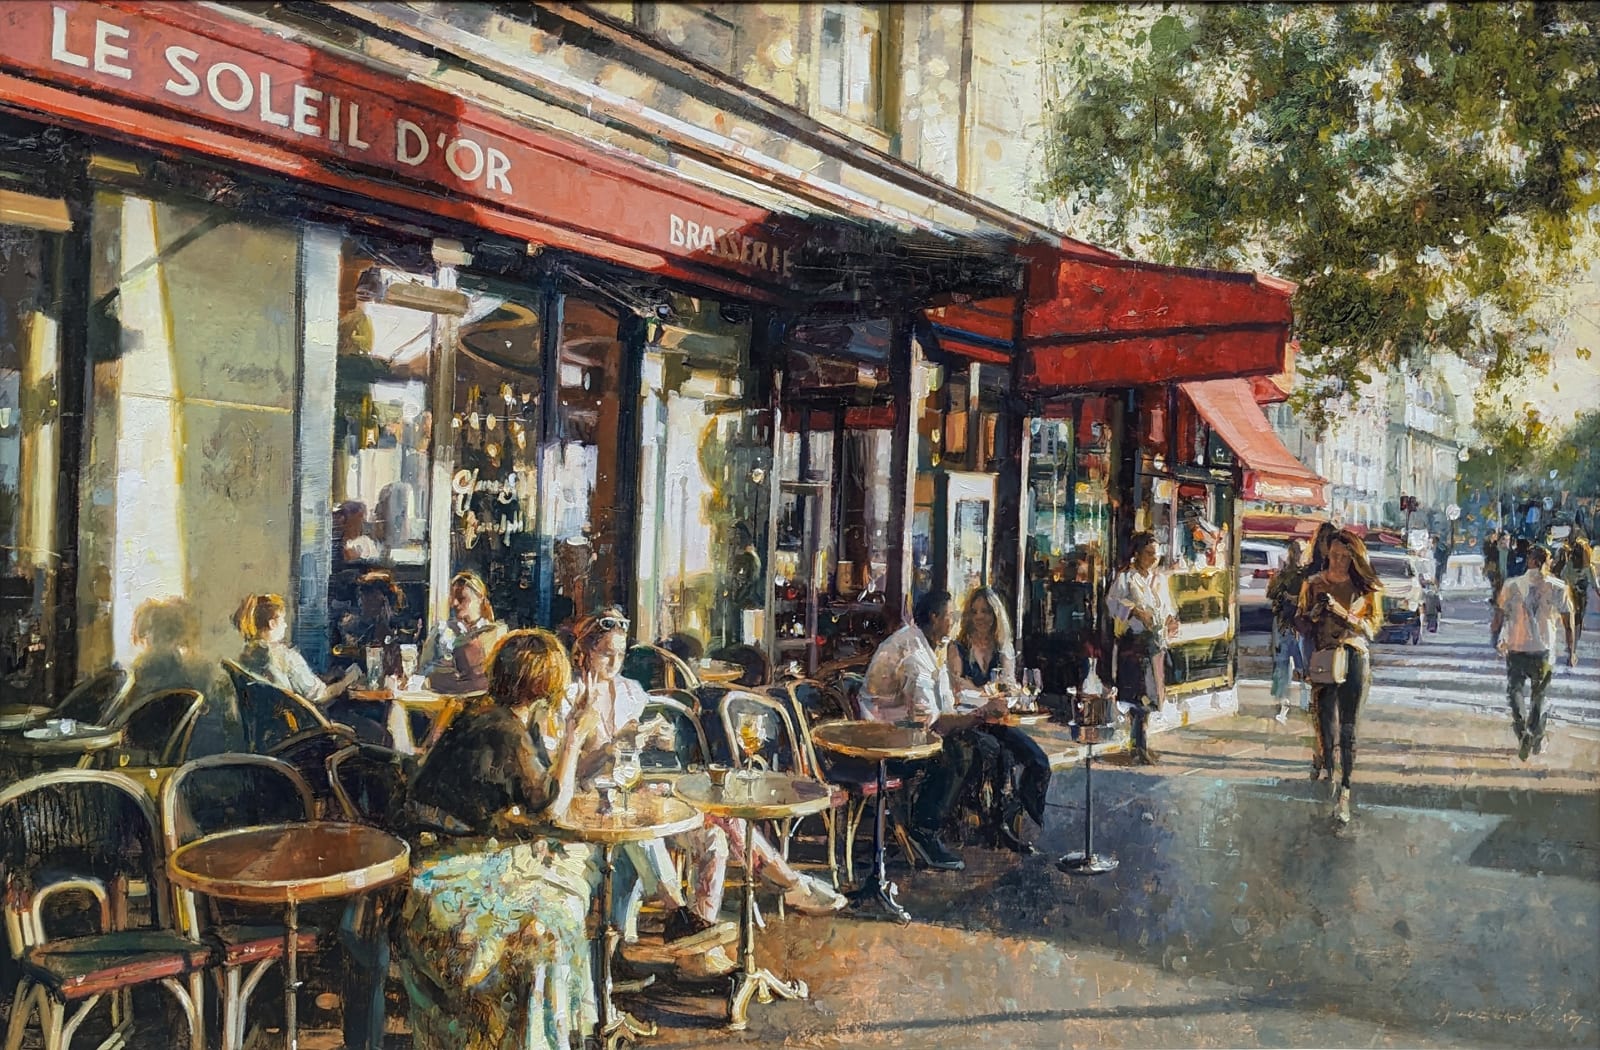 Douglas Gray, The Golden Sun, Paris | Thompson's Gallery